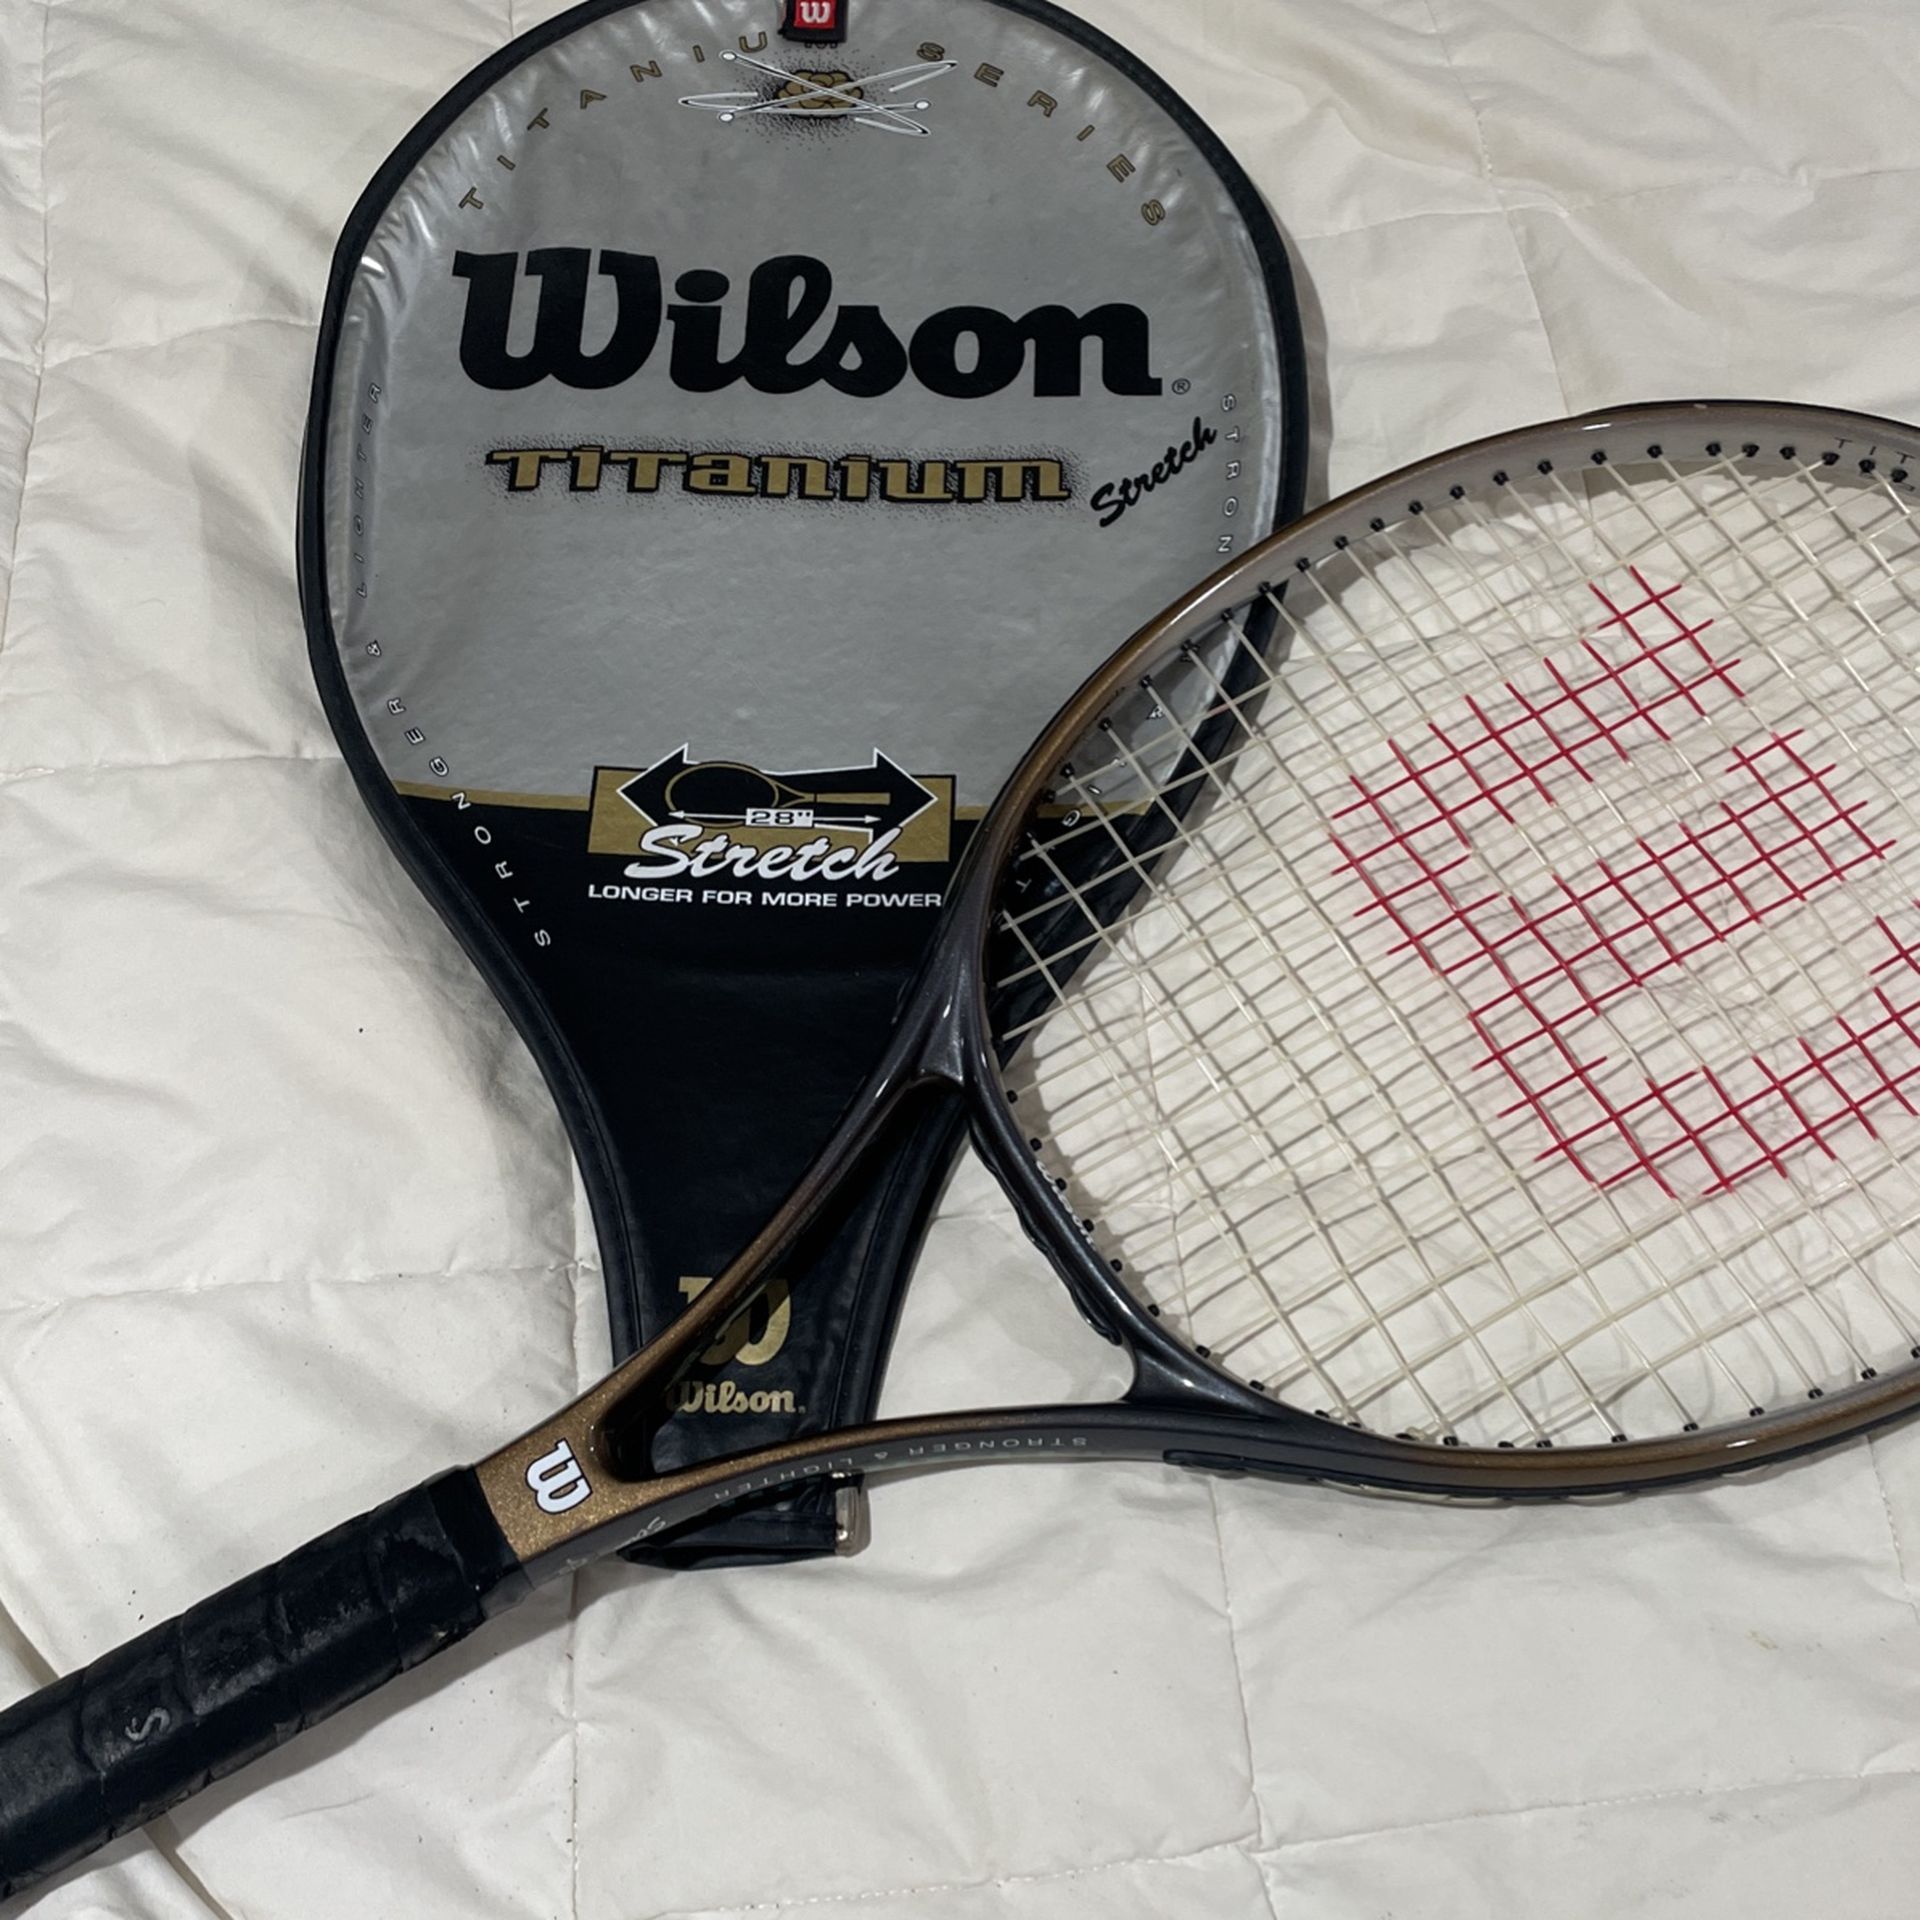 Wilson Titanium Stretch Tennis Racket